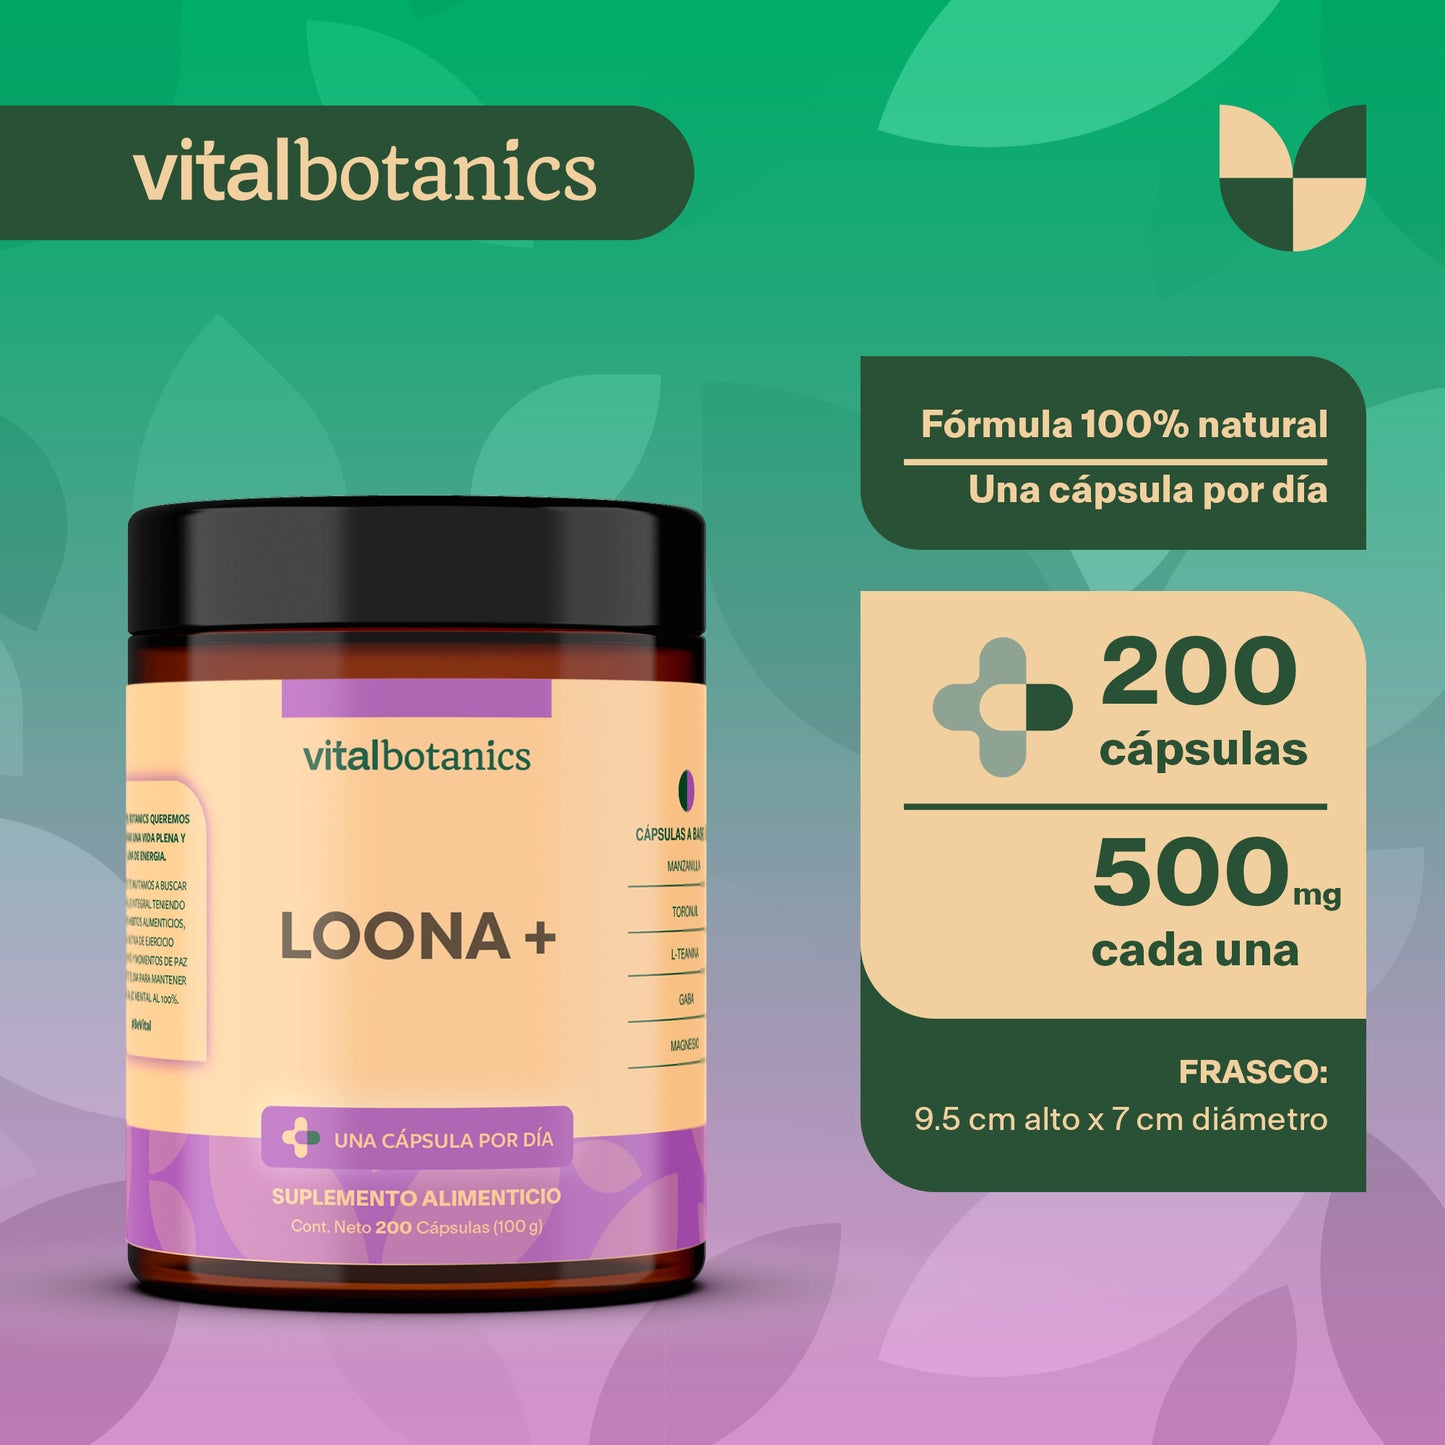 LOONA + | Pasiflora, Manzanilla, L-Teanina y Toronjil